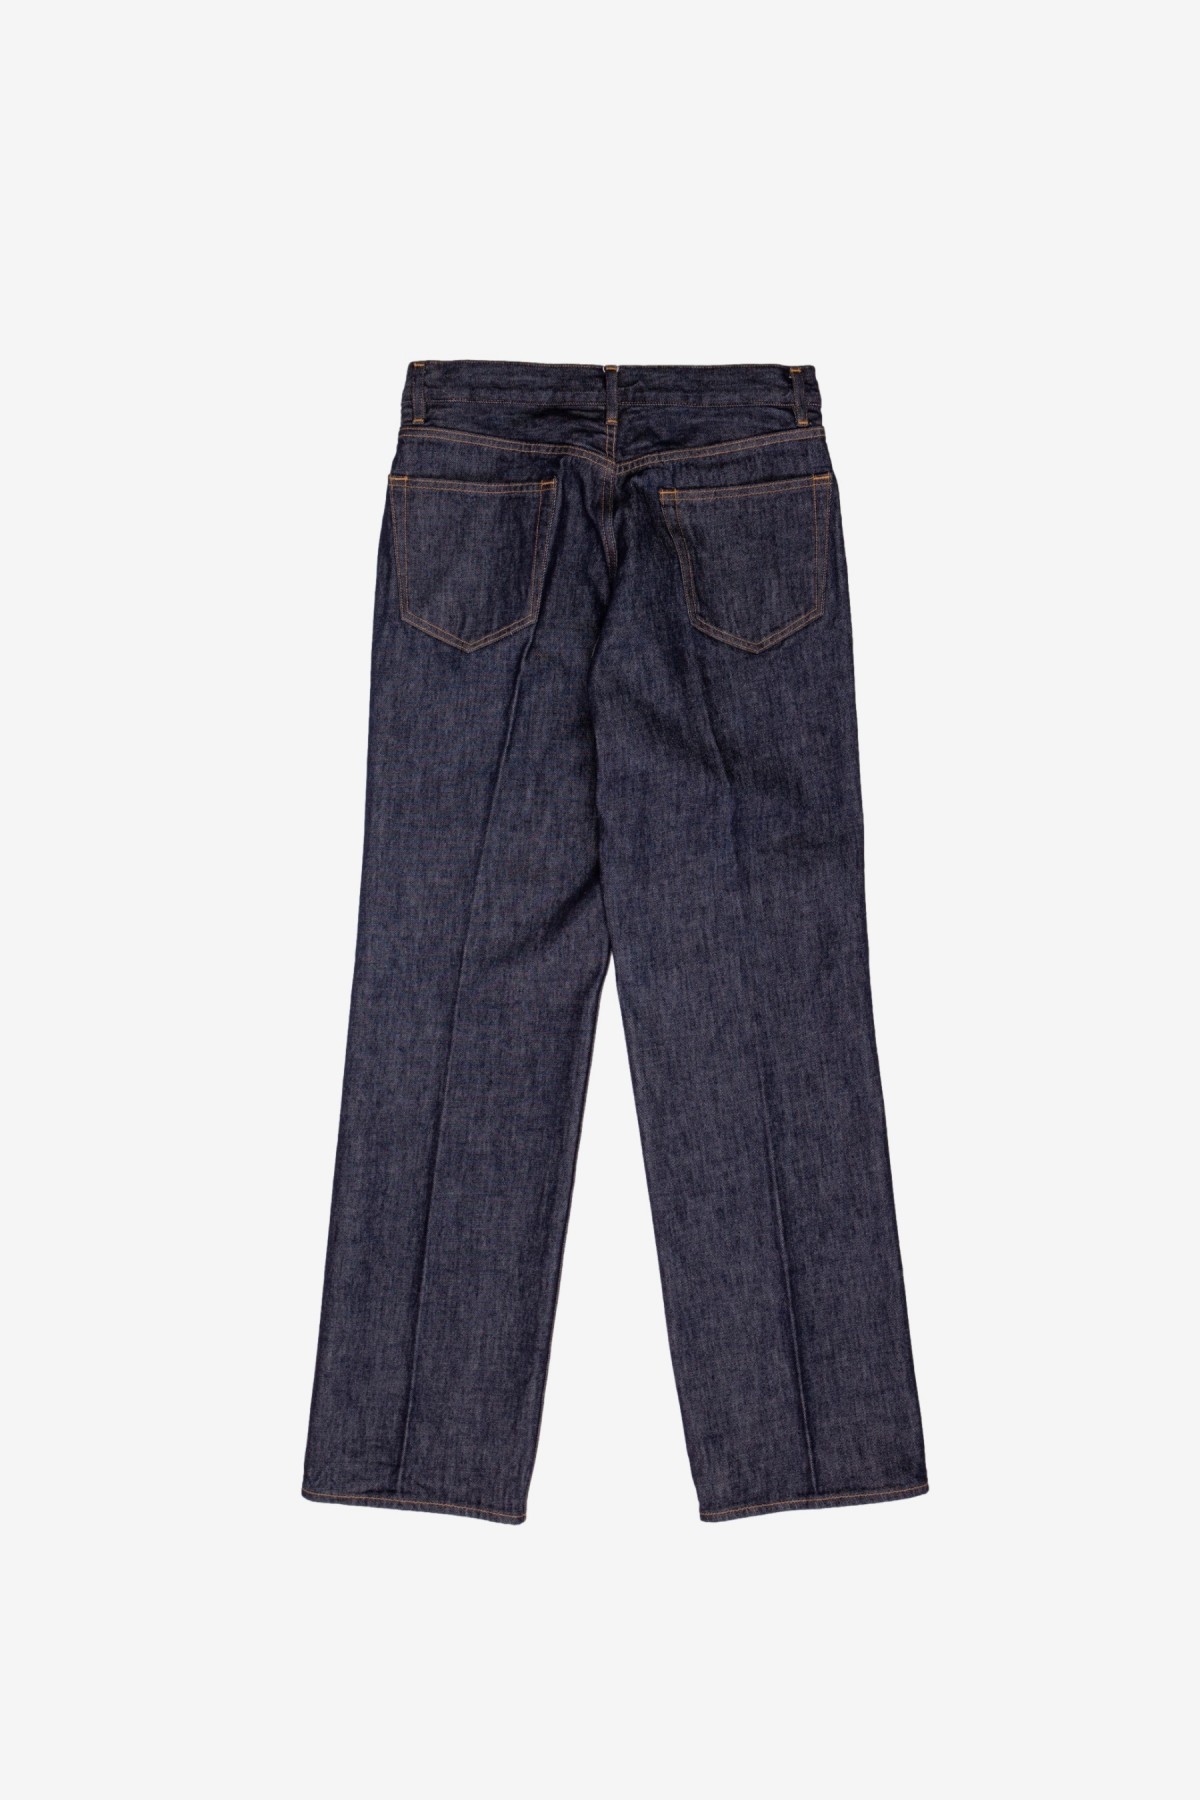 Hard Twist Denim 5P Pants in Indigo - Auralee | Afura Store